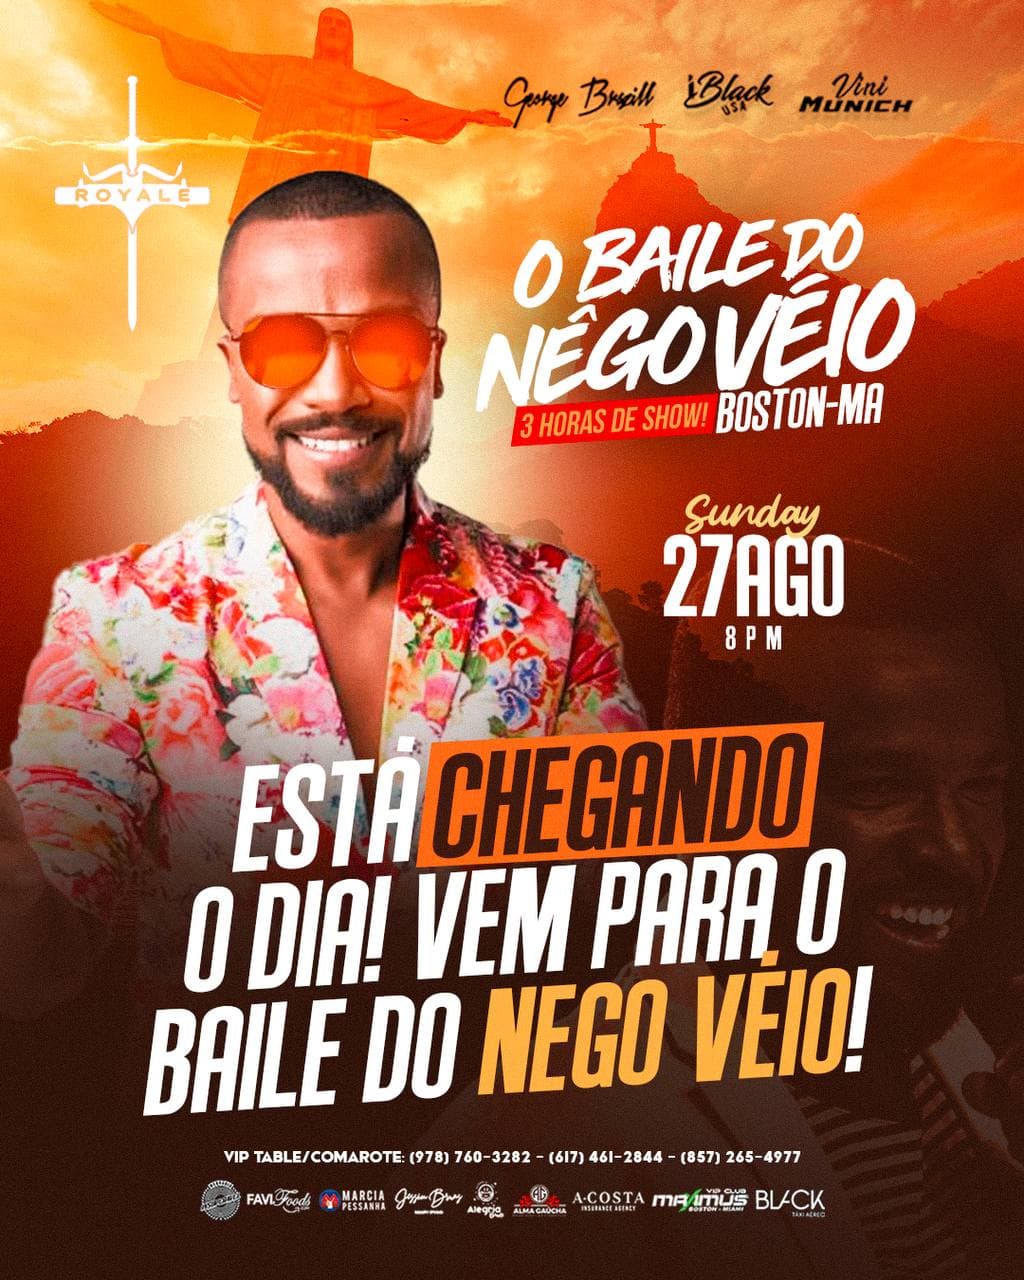 08 27 2023 - Alexandre Pires x Favela Encantada -O Baile do Nego Veio - Sunday - Royale Boston - iBlackUSA